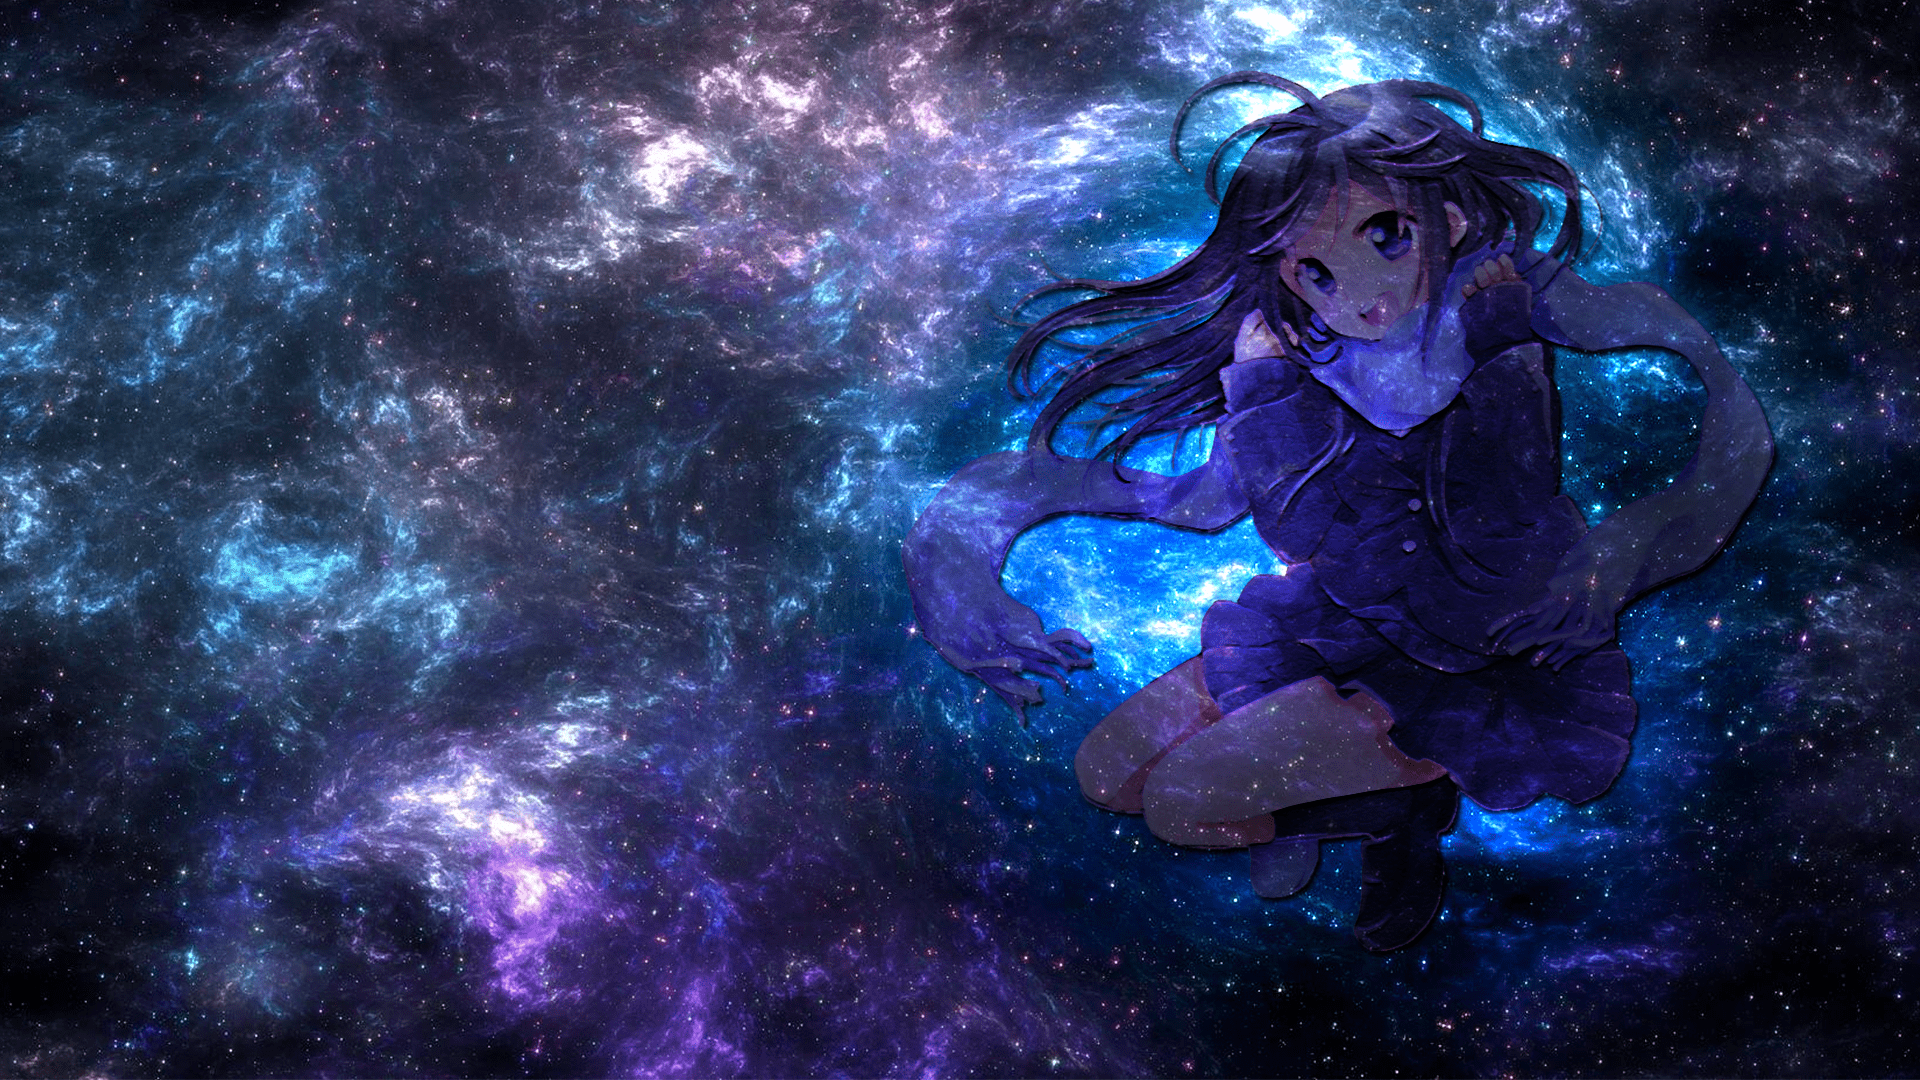 Anime Galaxy Girl Wallpapers Top Free Anime Galaxy Girl